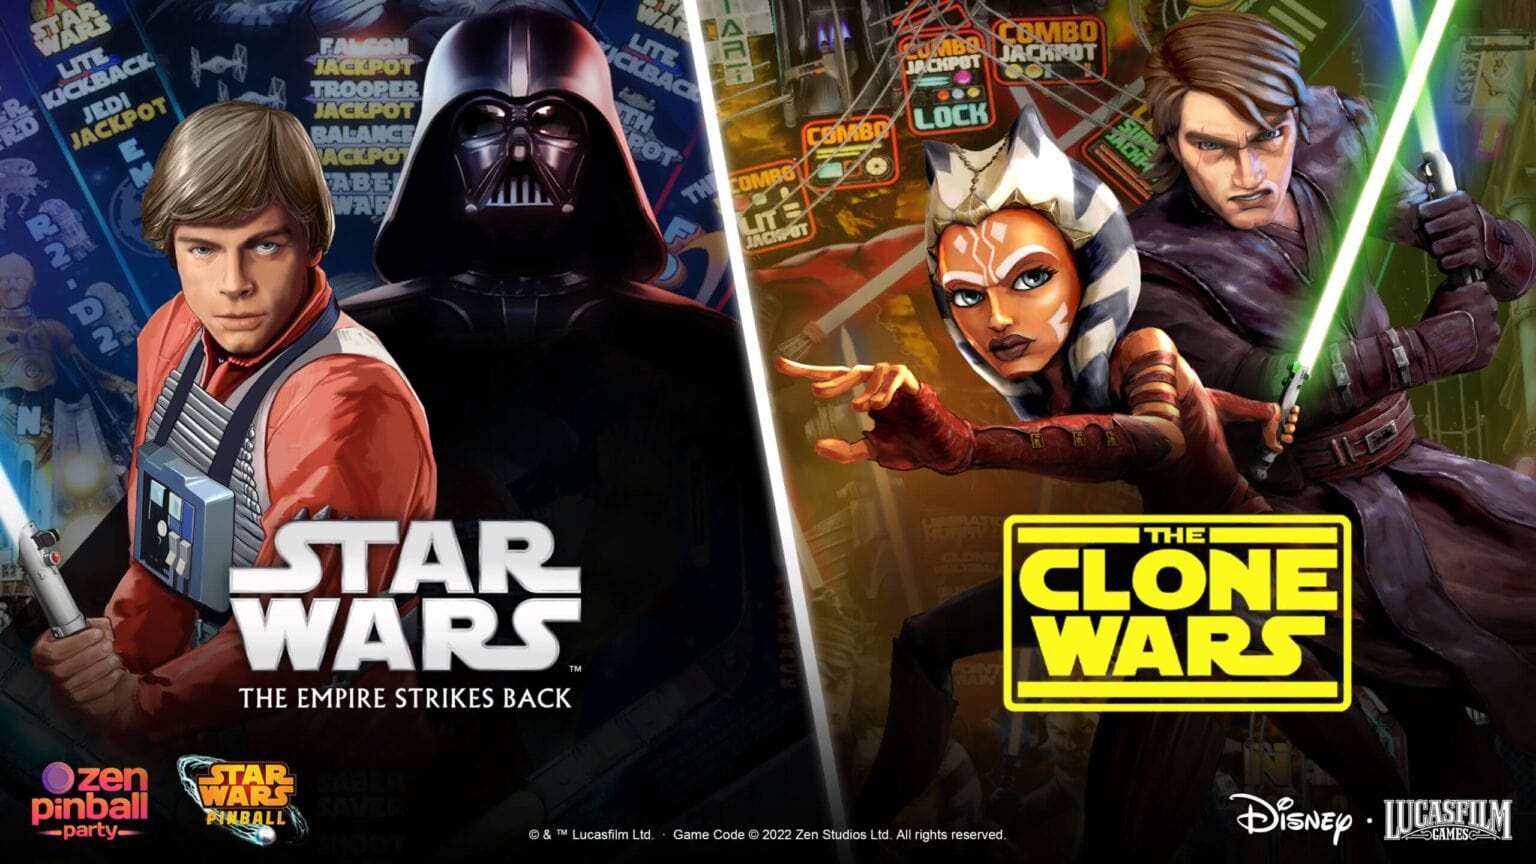 Take on Darth Vader in 'Star Wars' update to 'Zen Pinball Party' on Apple Arcade